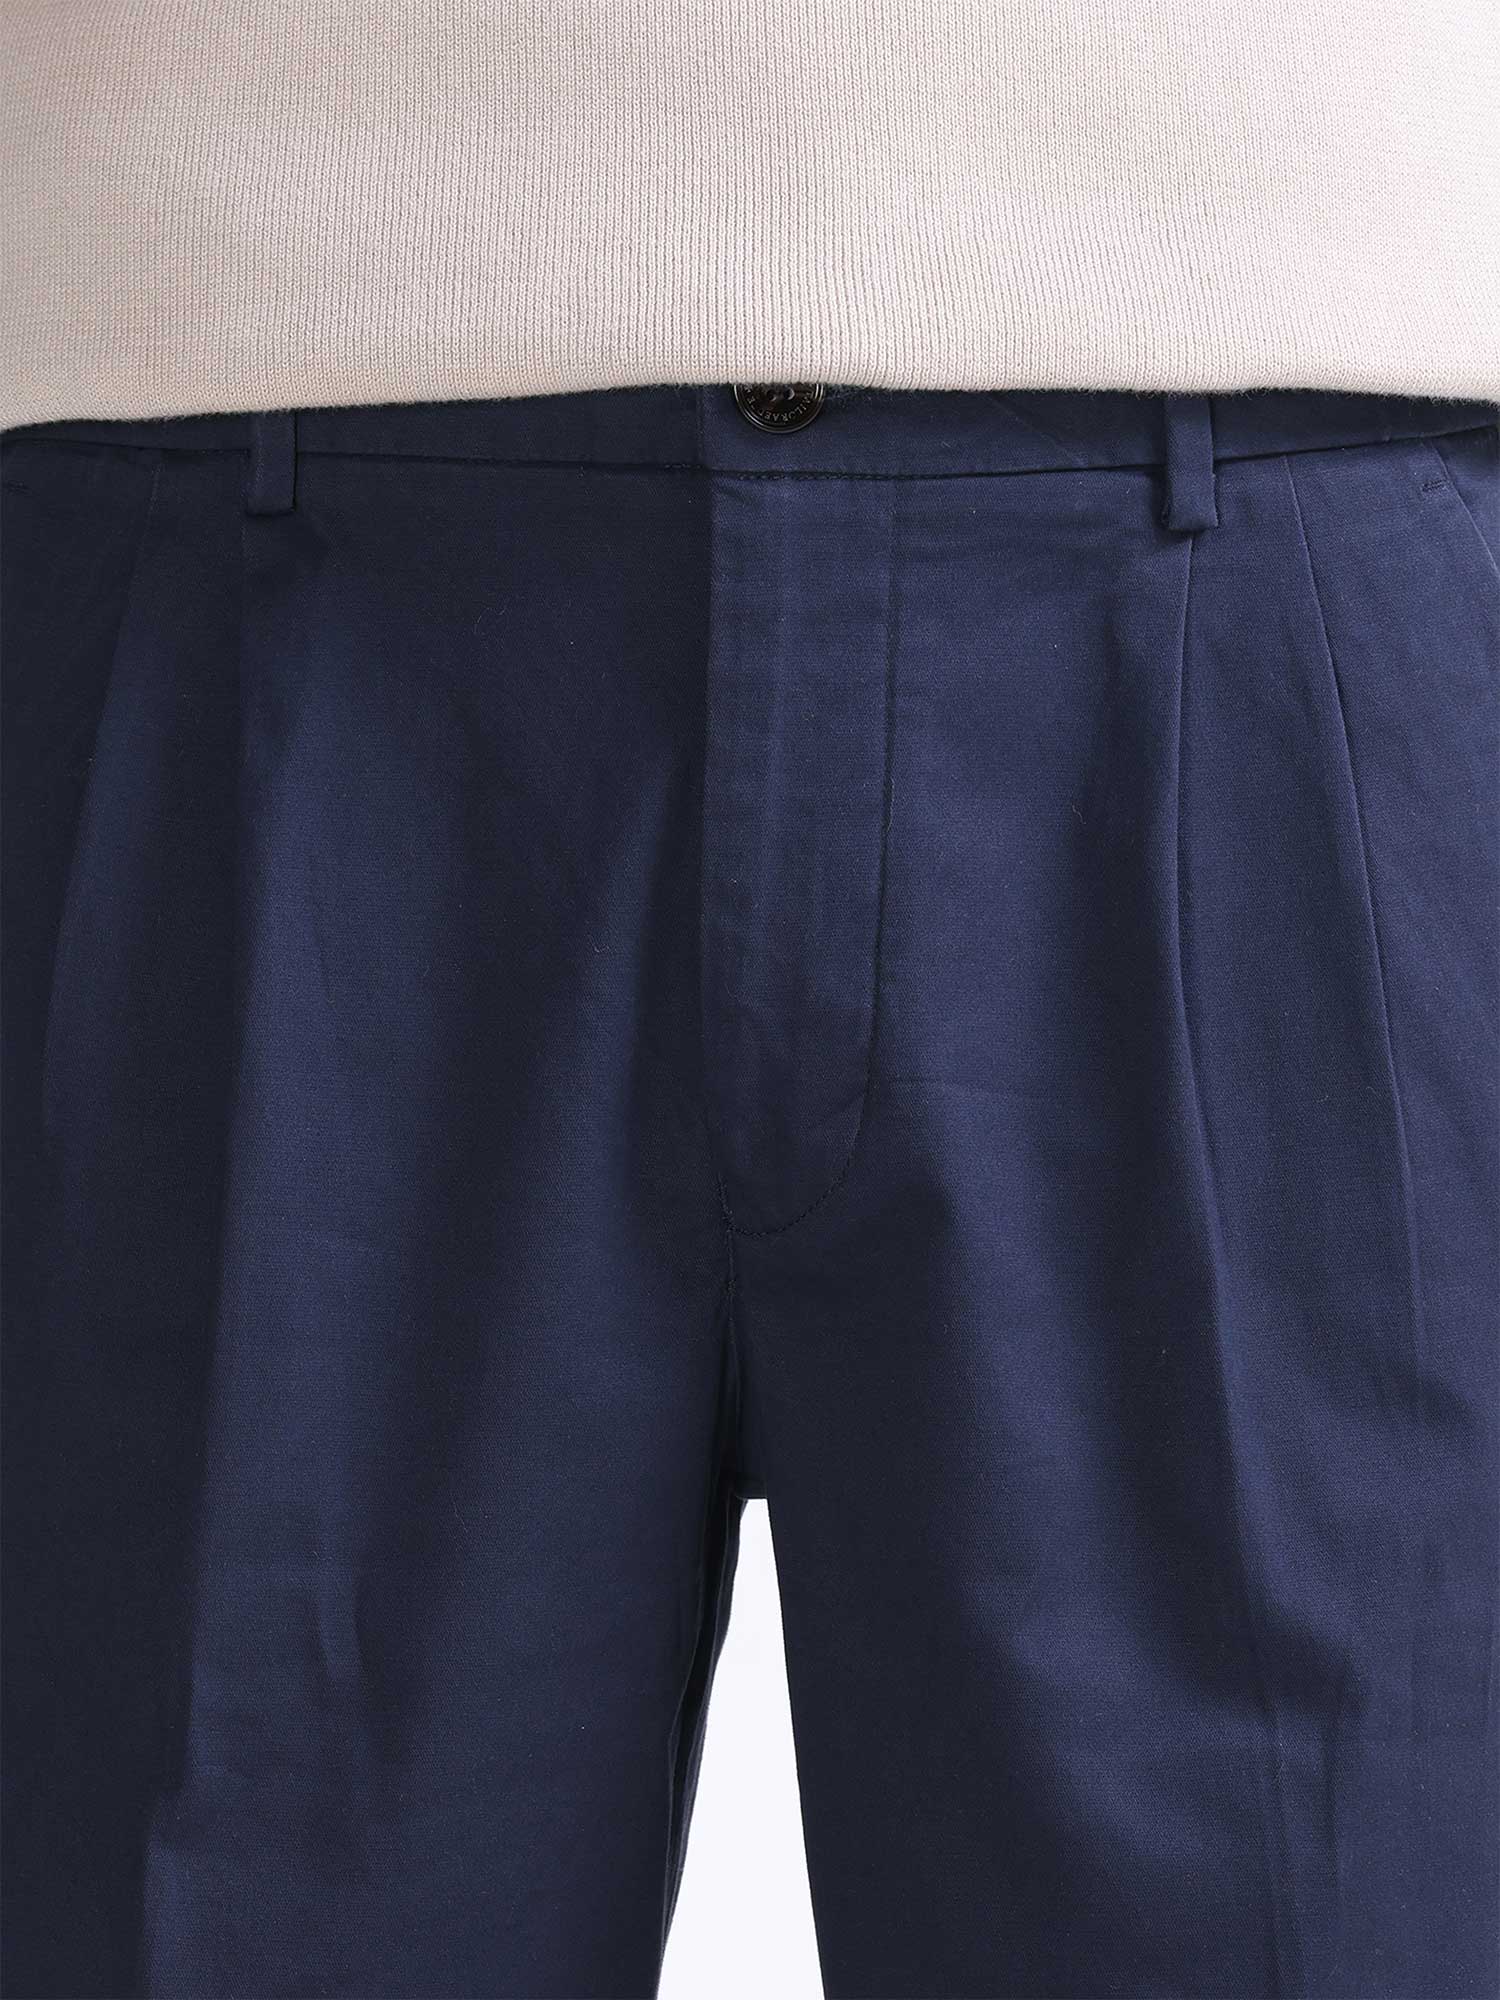 Buy Navy Blue Luxurious Linen Pant